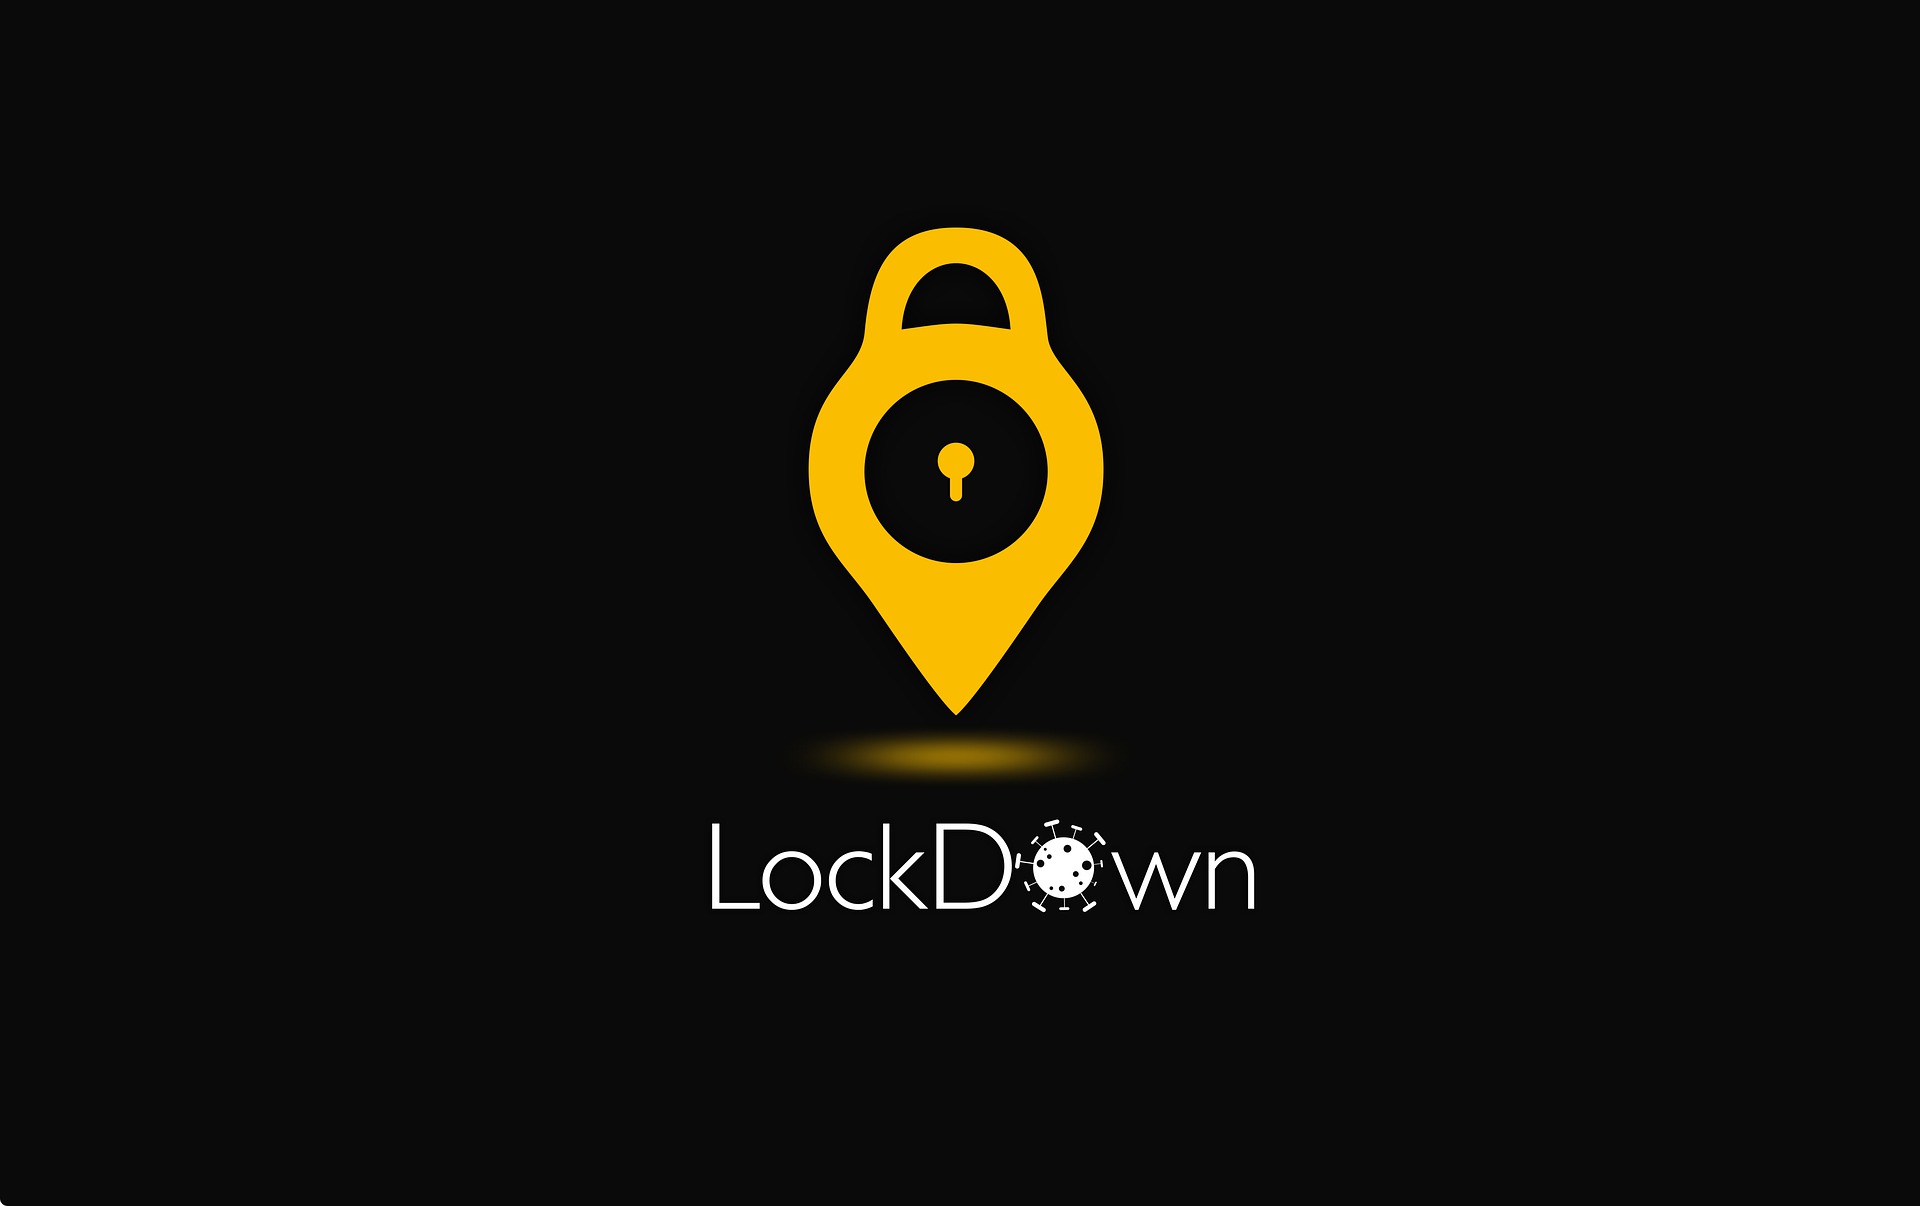 lockdown-5026667_1920